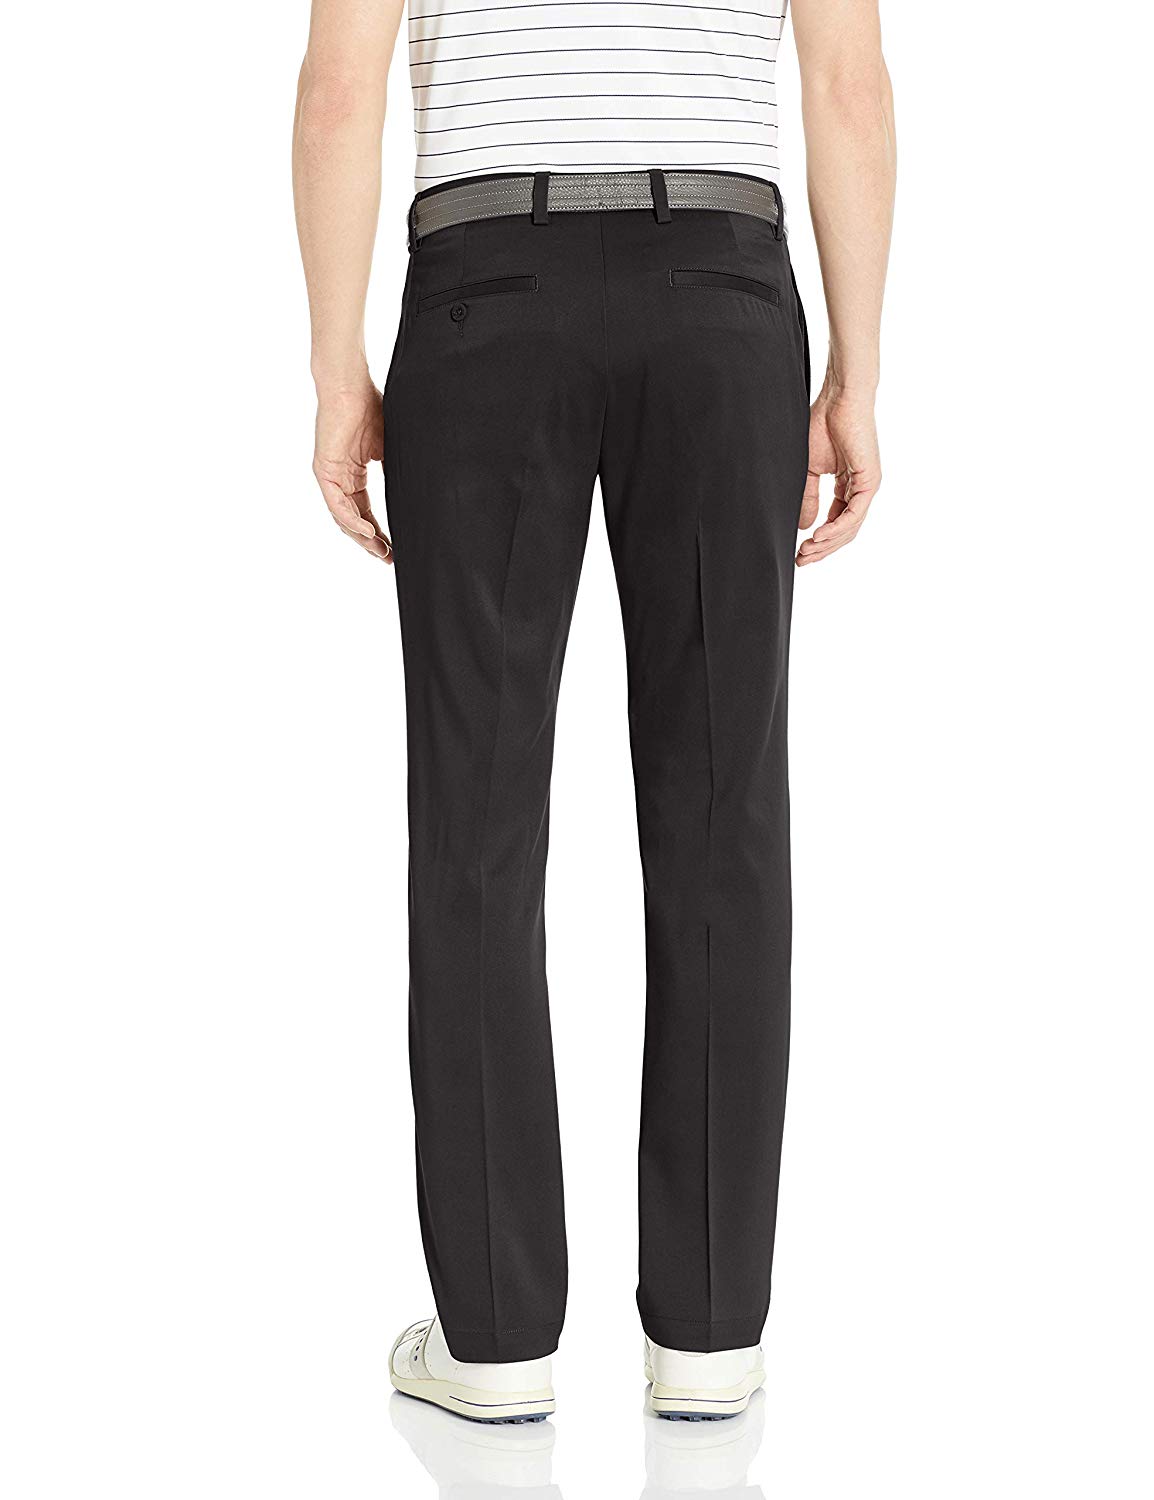 Men's Slim-Fit Stretch Golf Pant,, Black, Size 38W x 34L | eBay